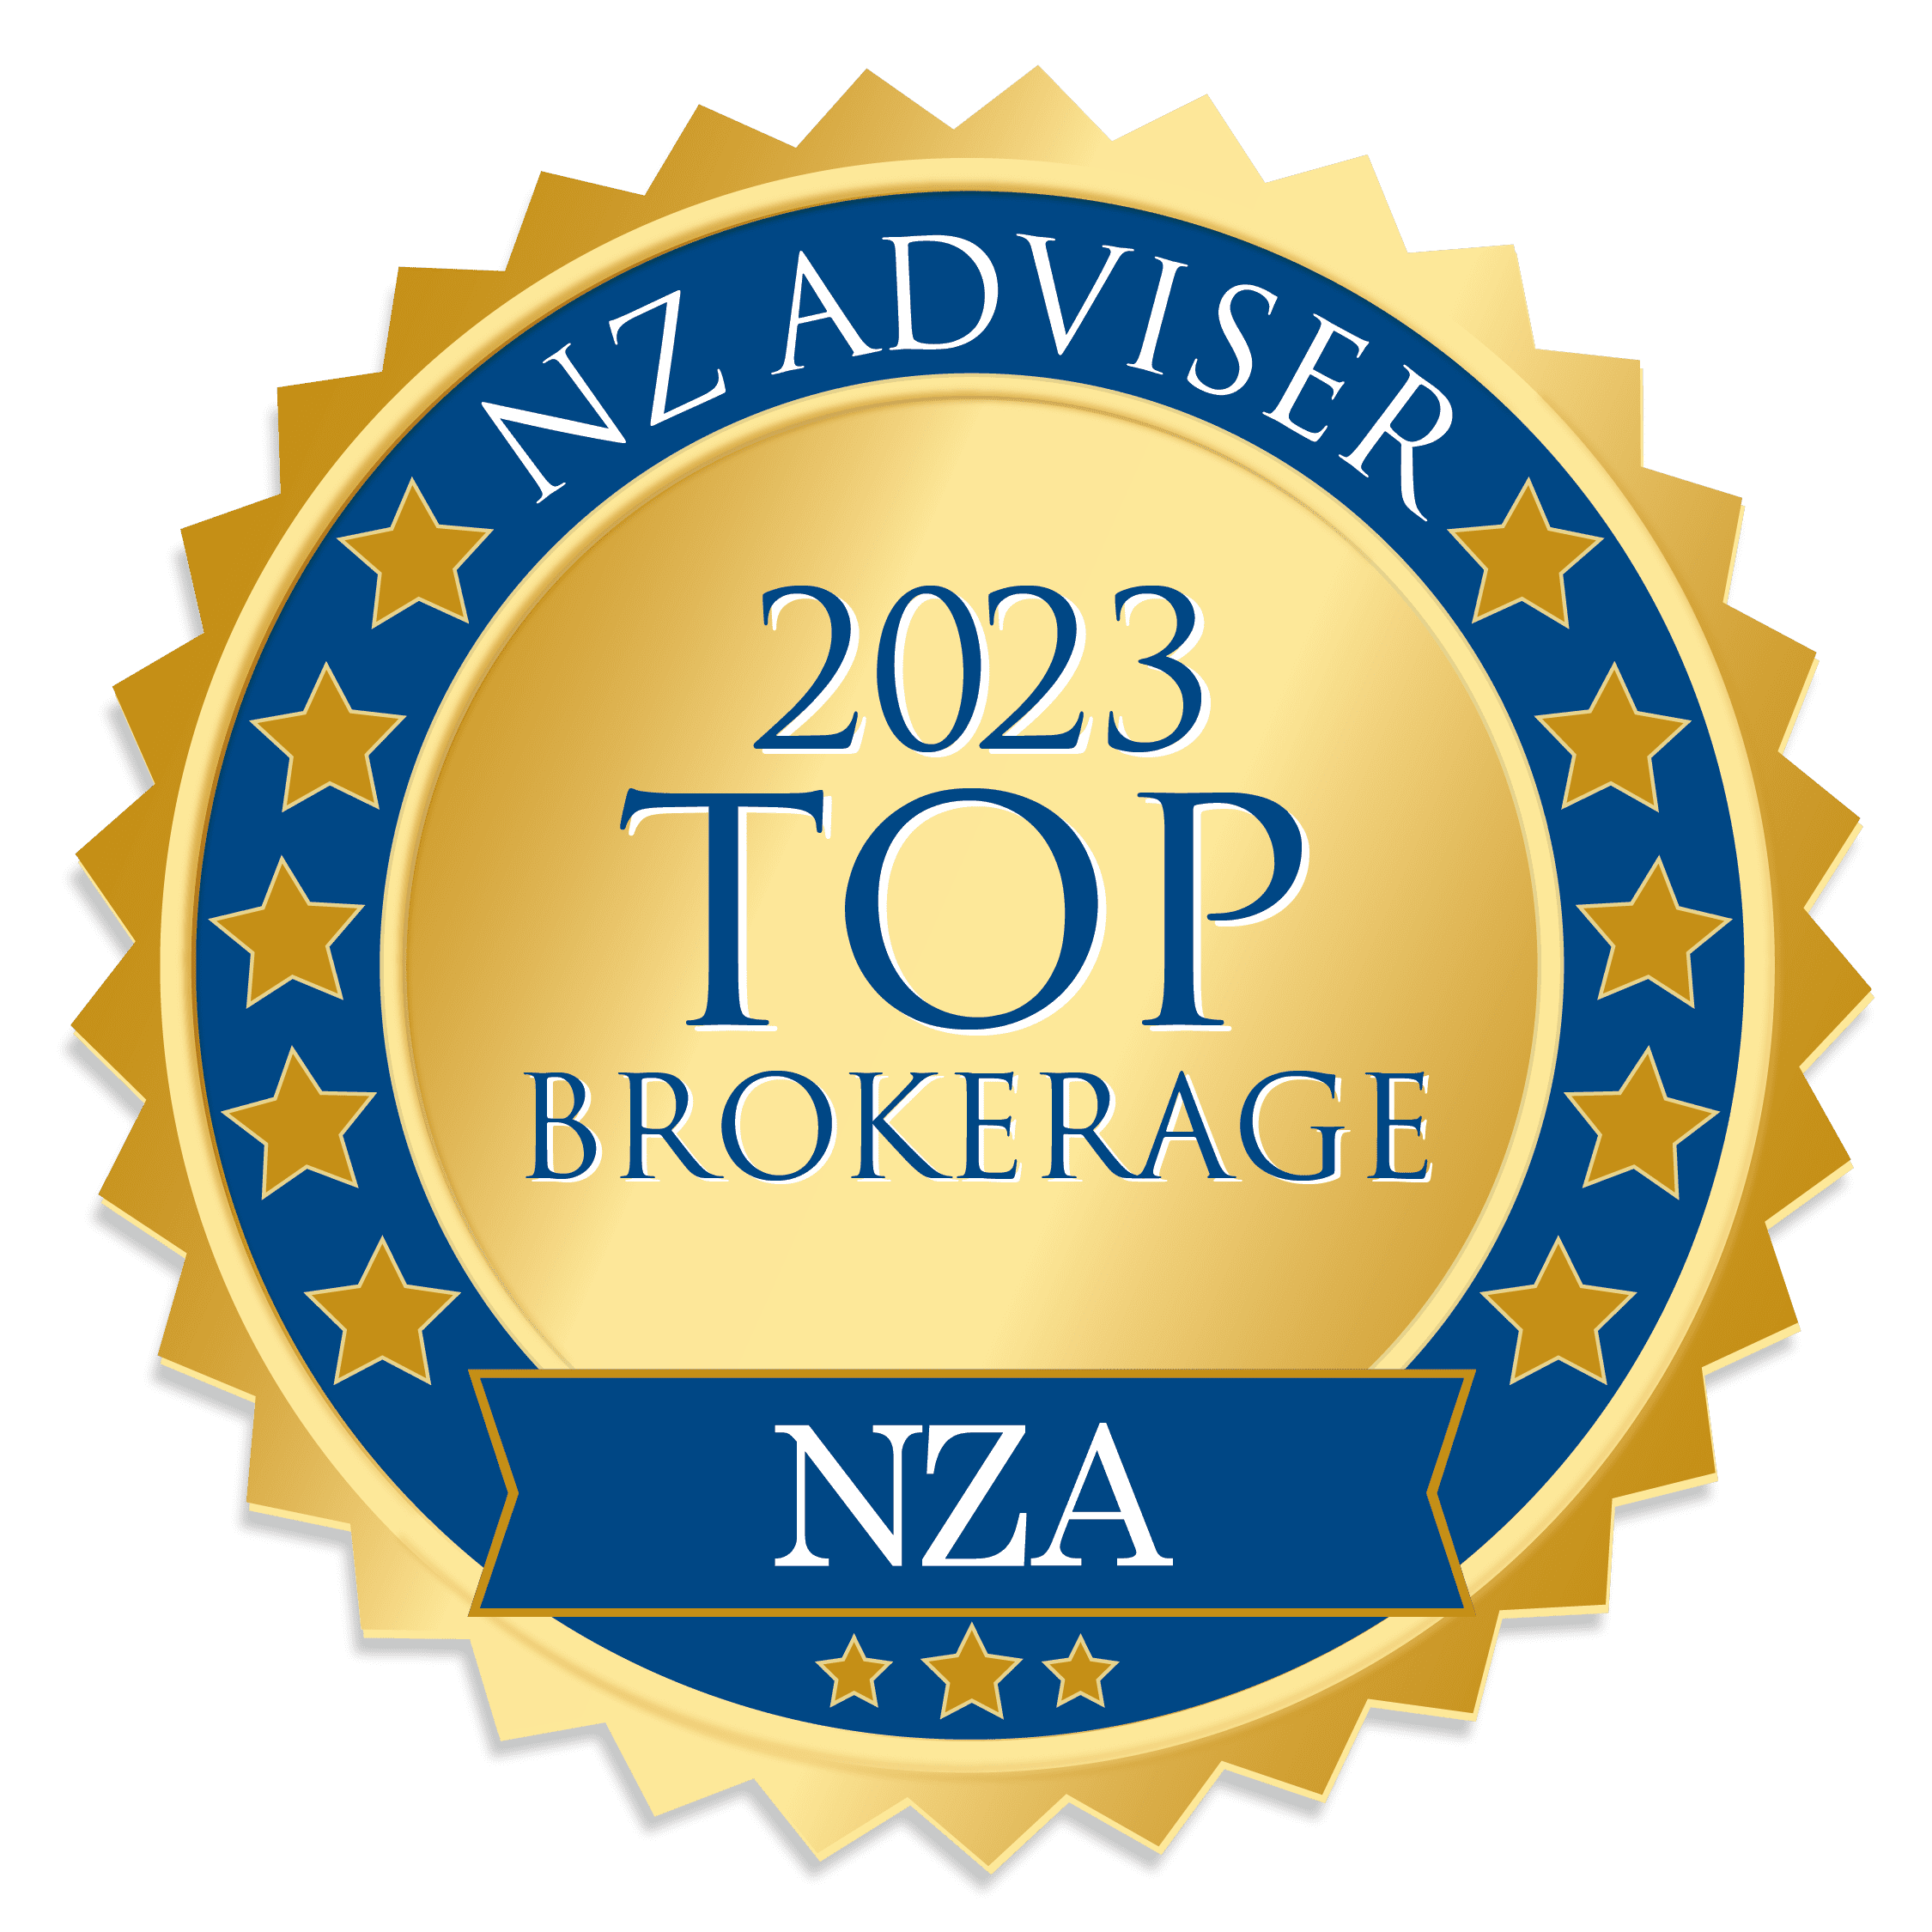 NZAD Top Brokerage 2023